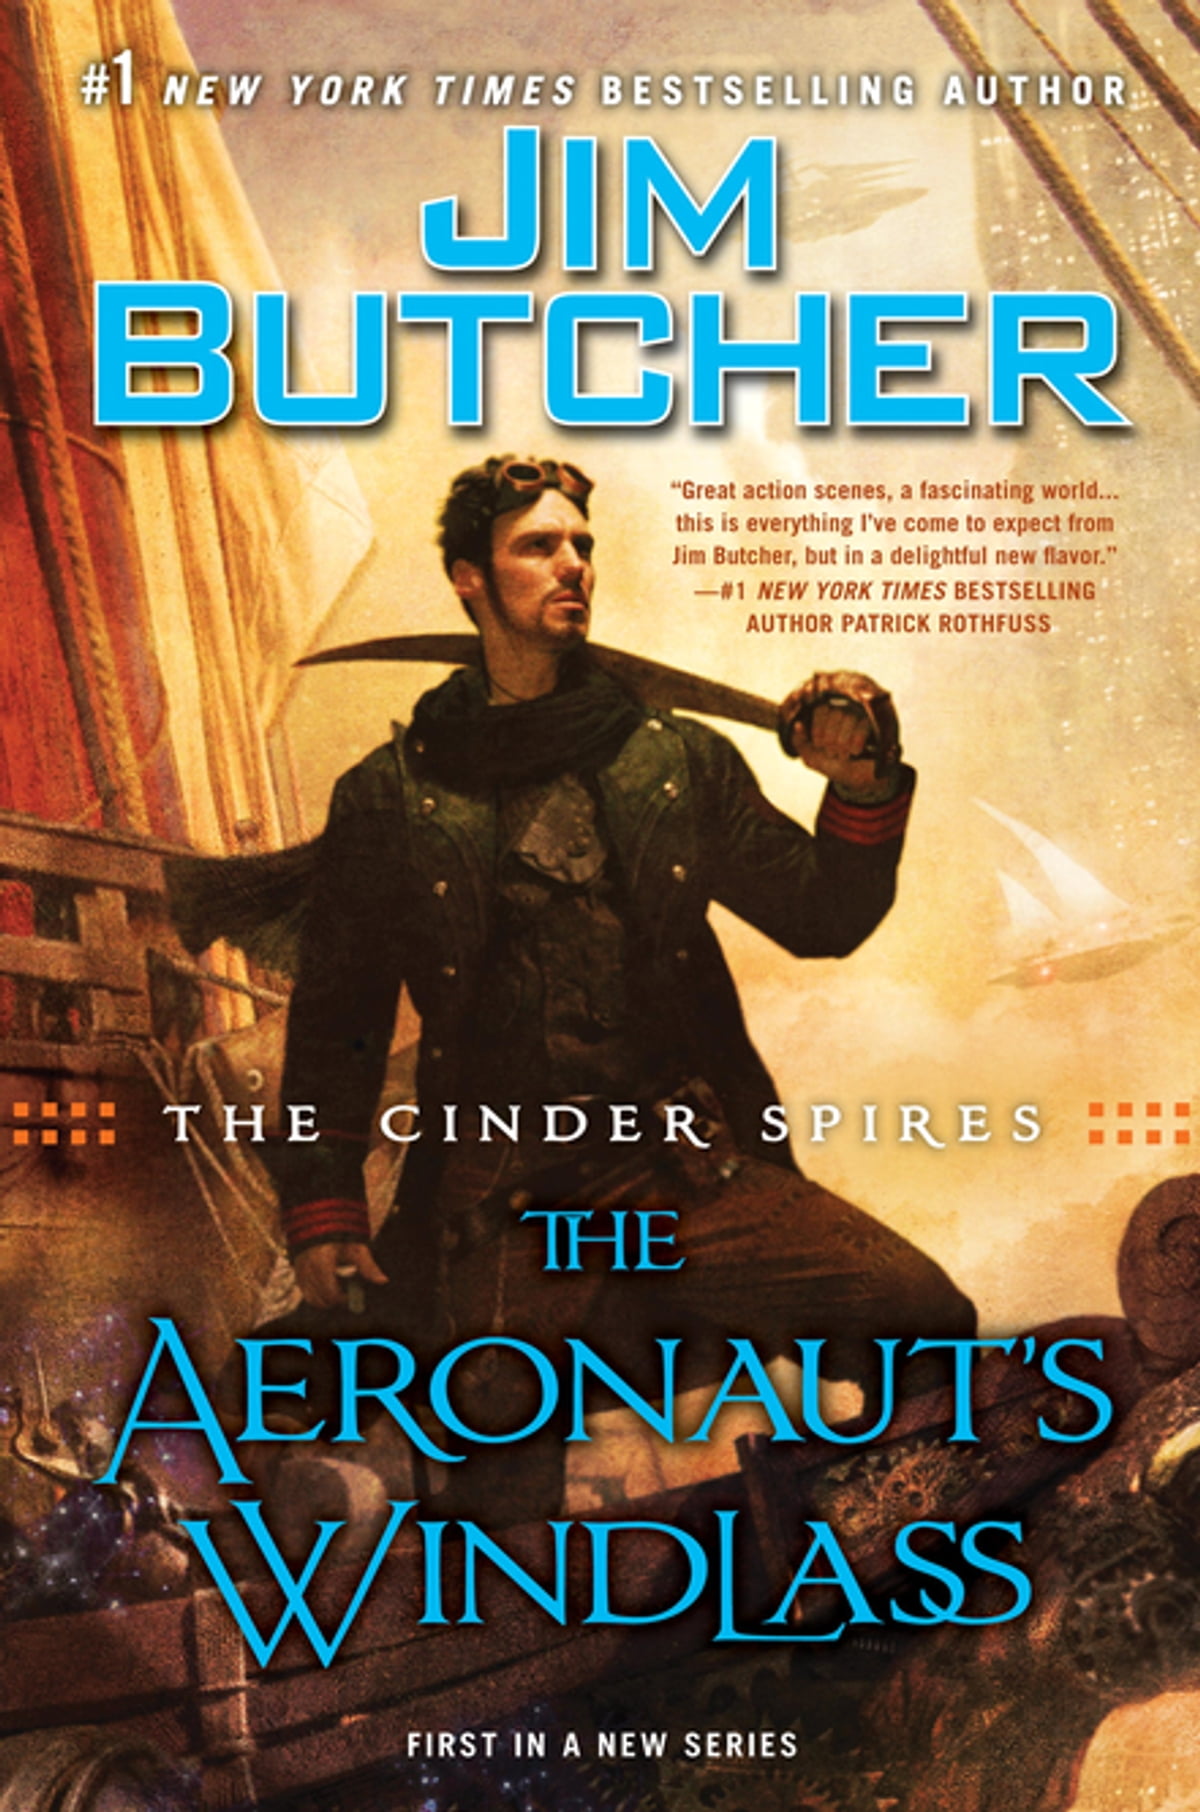 Jim Butcher: The Aeronaut's Windlass (2015)